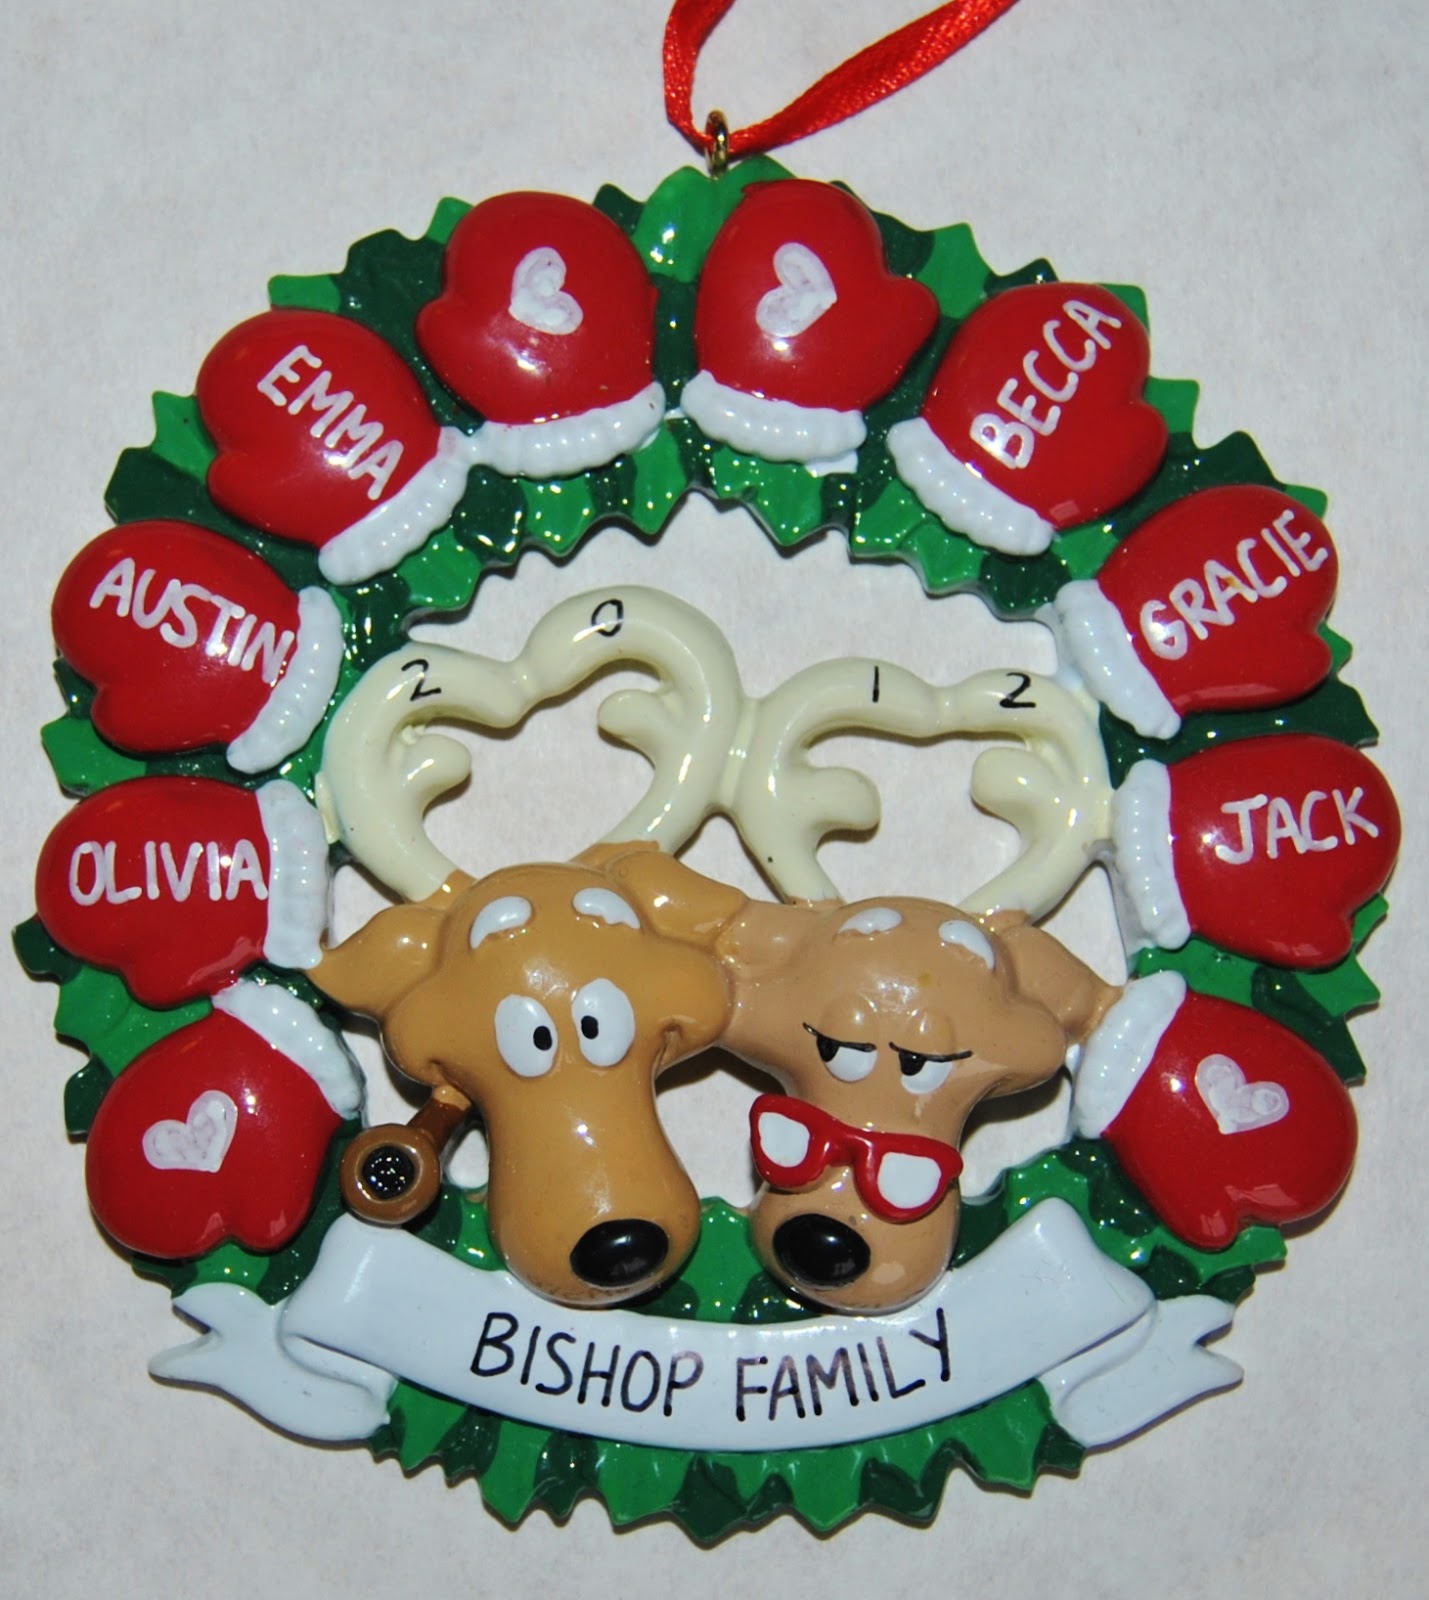 Beautiful Personalized Christmas Ornaments
